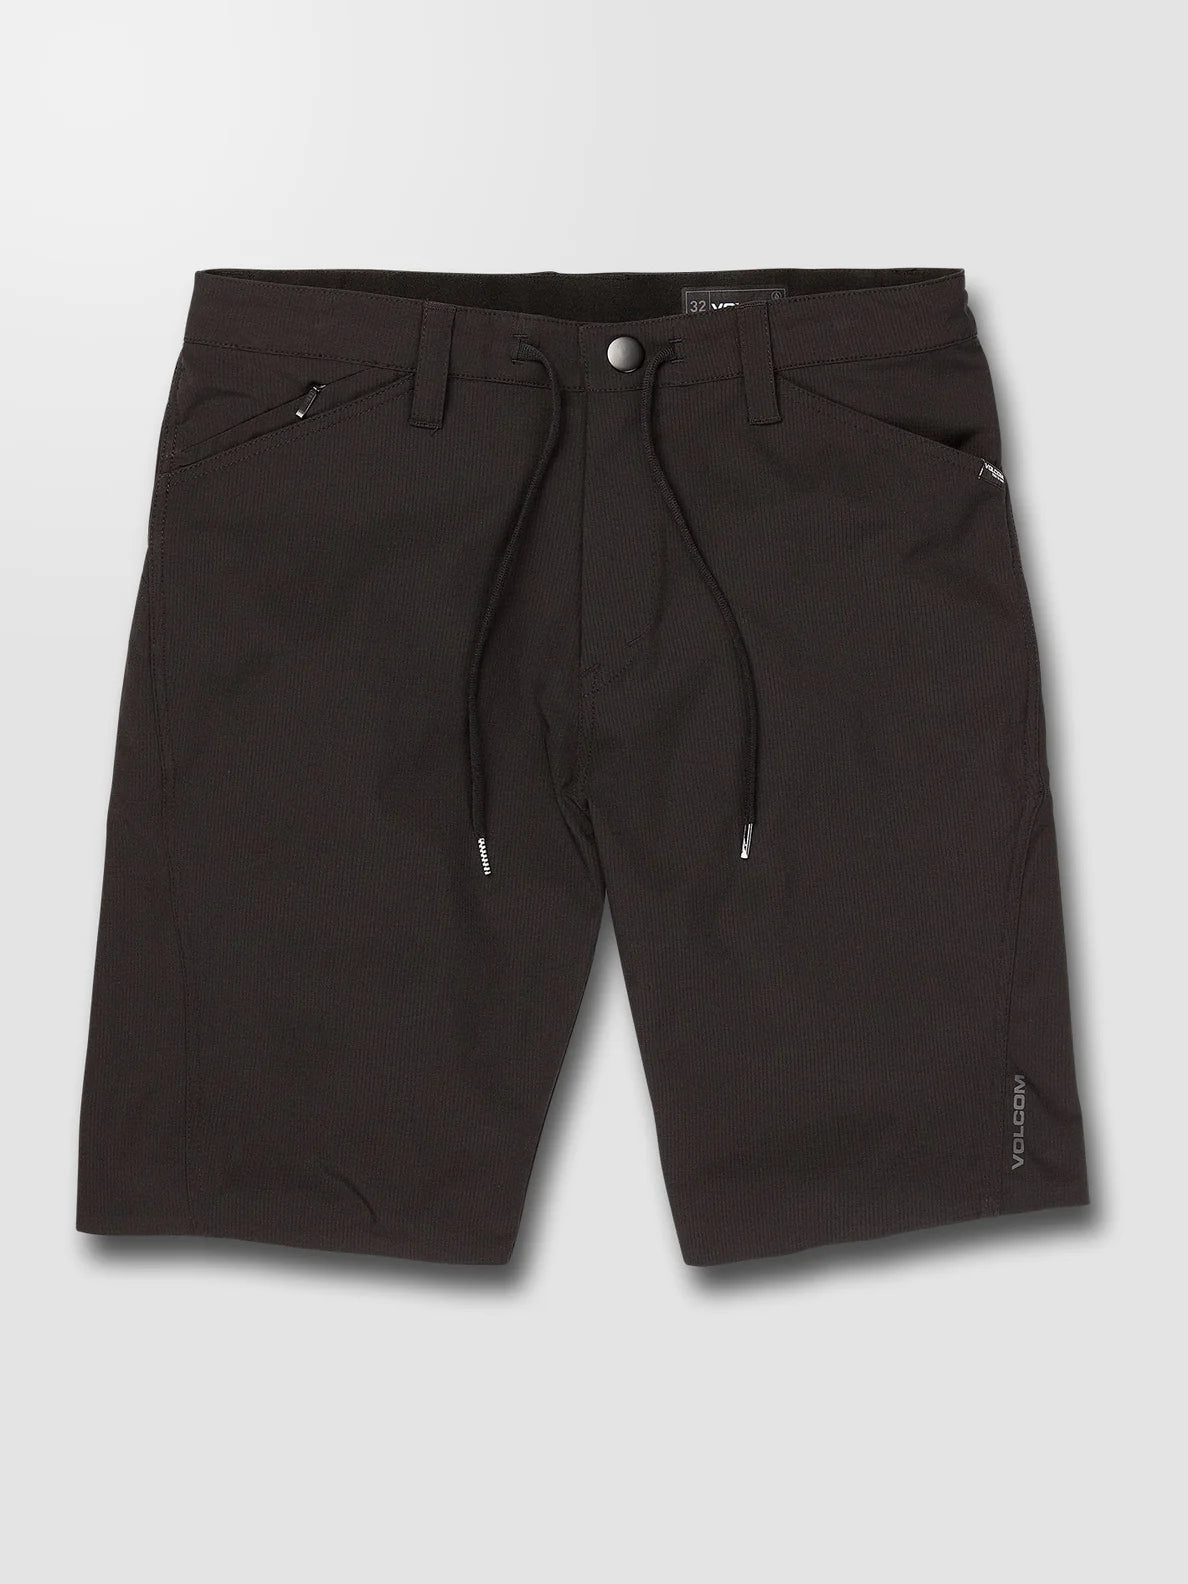 Pantalon Corto Volcom 91 Trails Hybrid 21" Black | Pantalones cortos de Hombre | Todos los pantalones de hombre | Volcom Shop | surfdevils.com